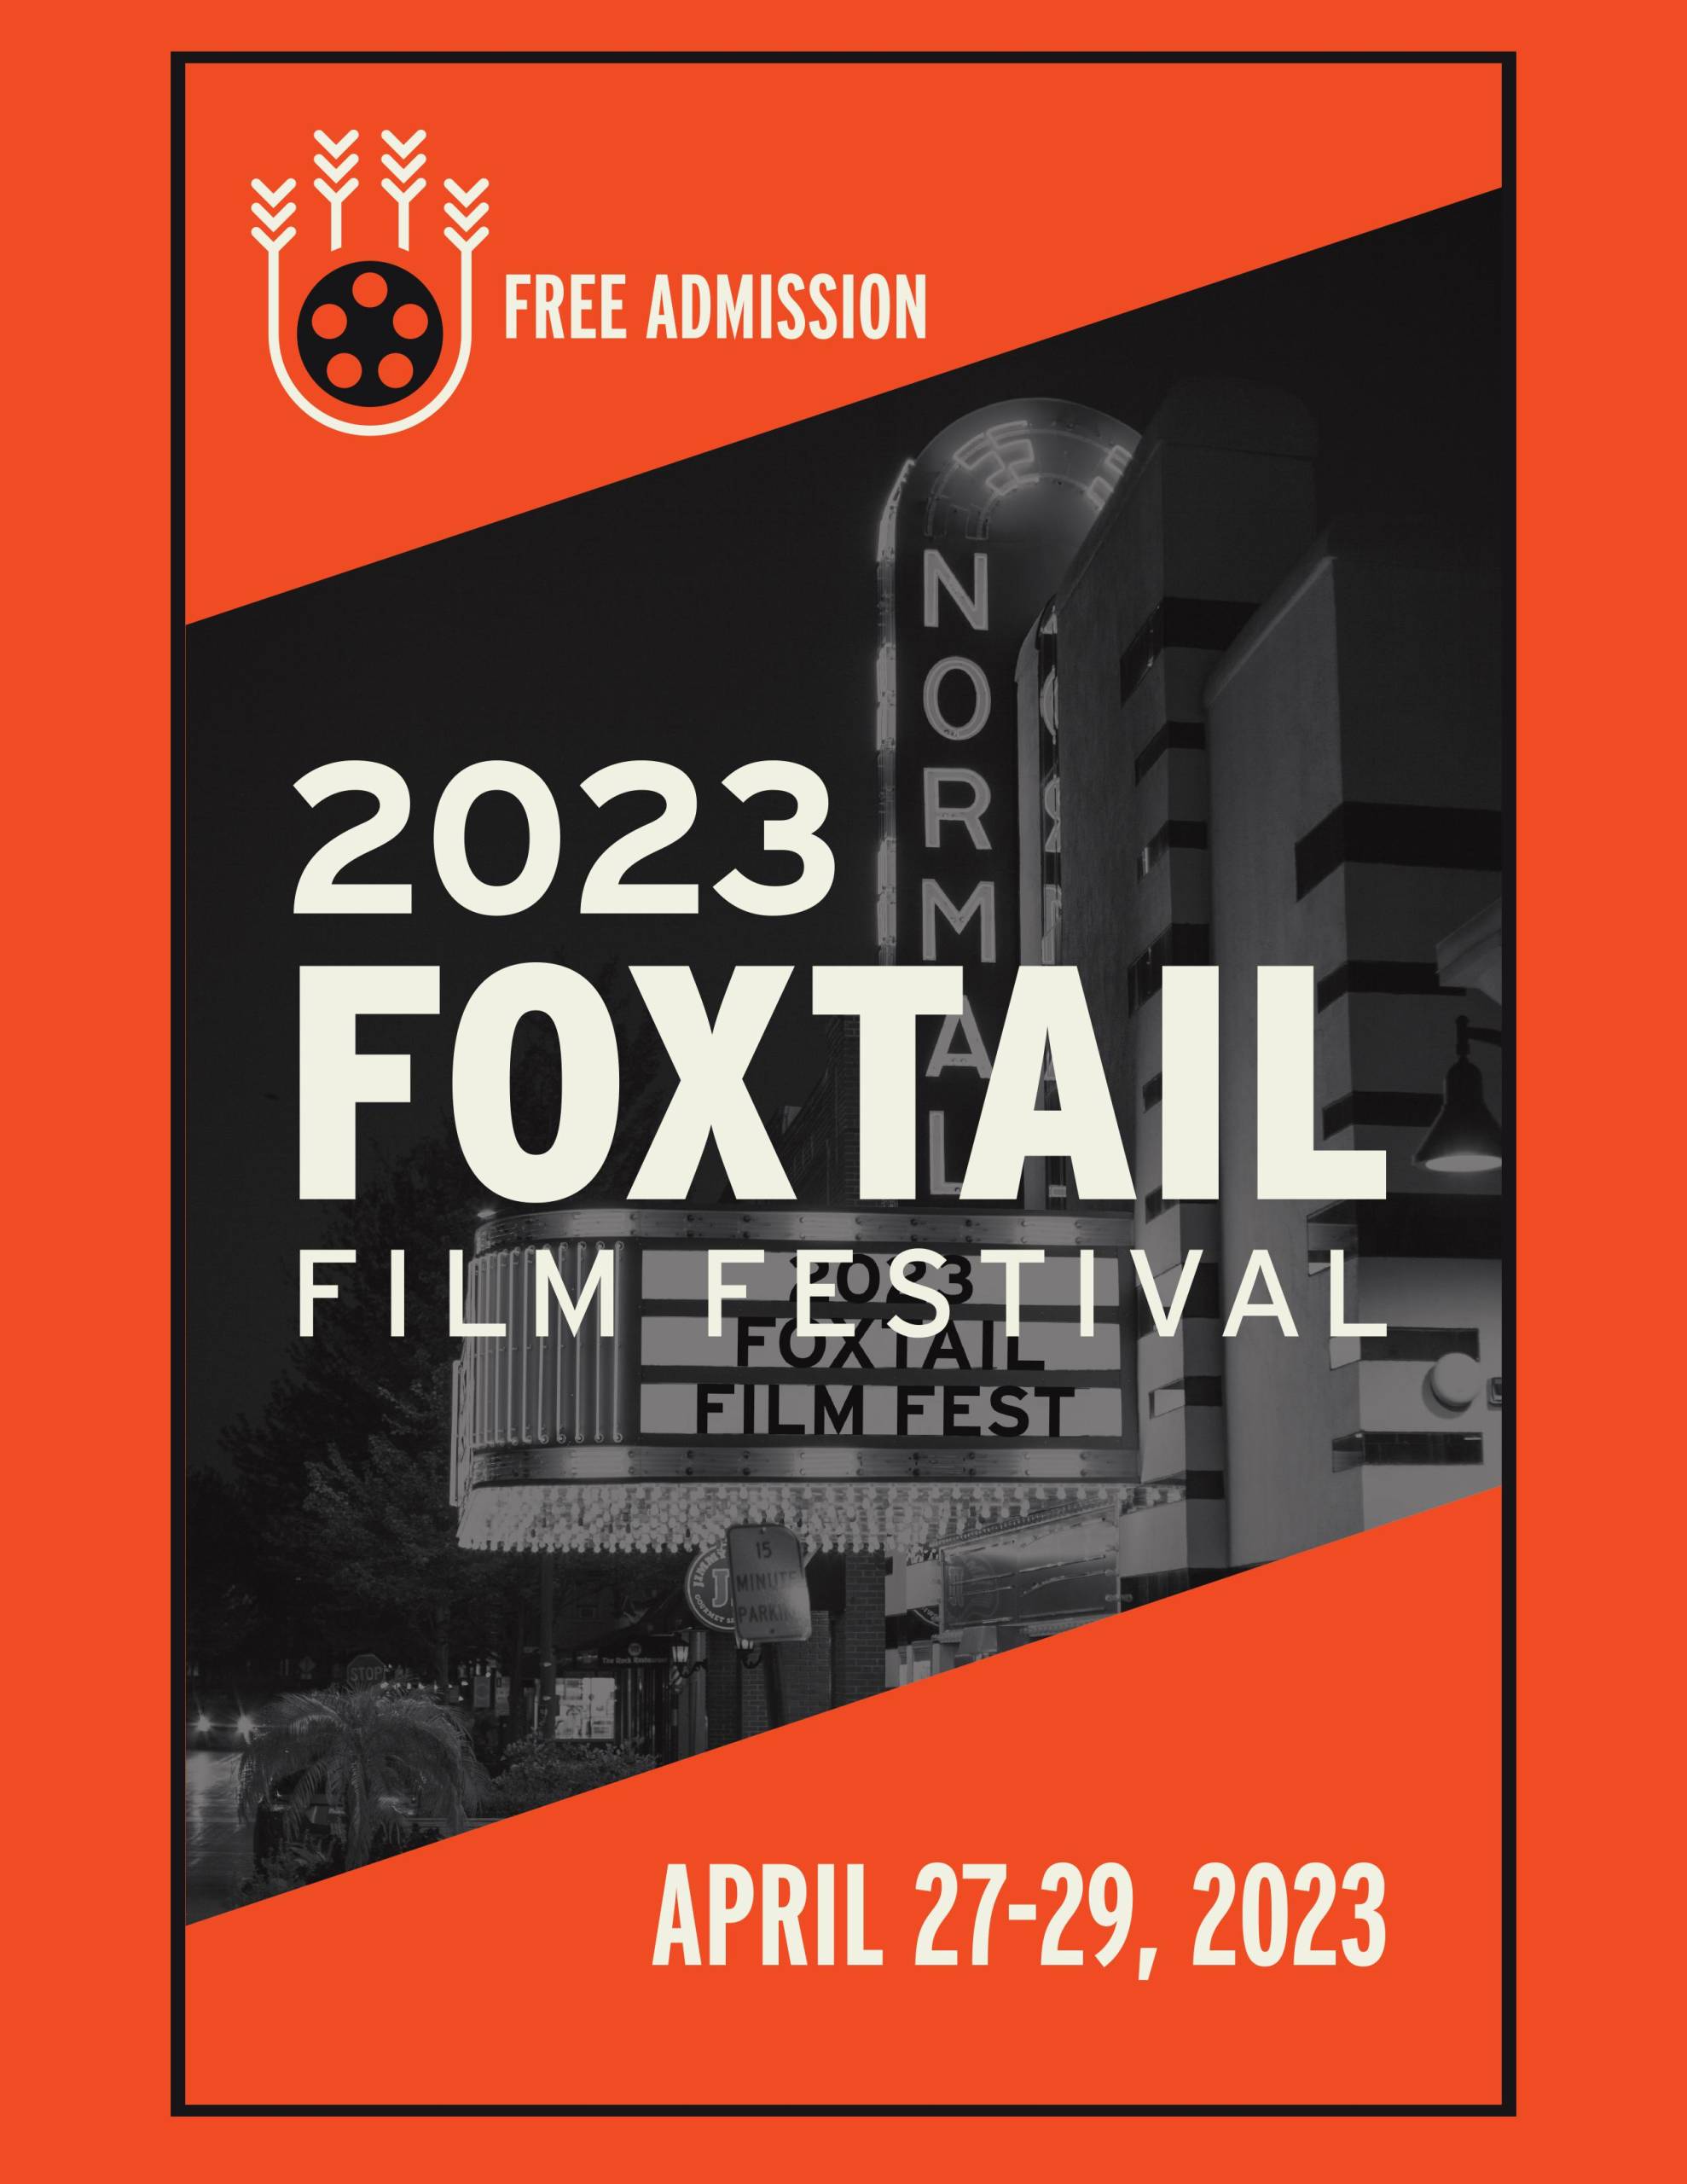 Foxtail Film Festival